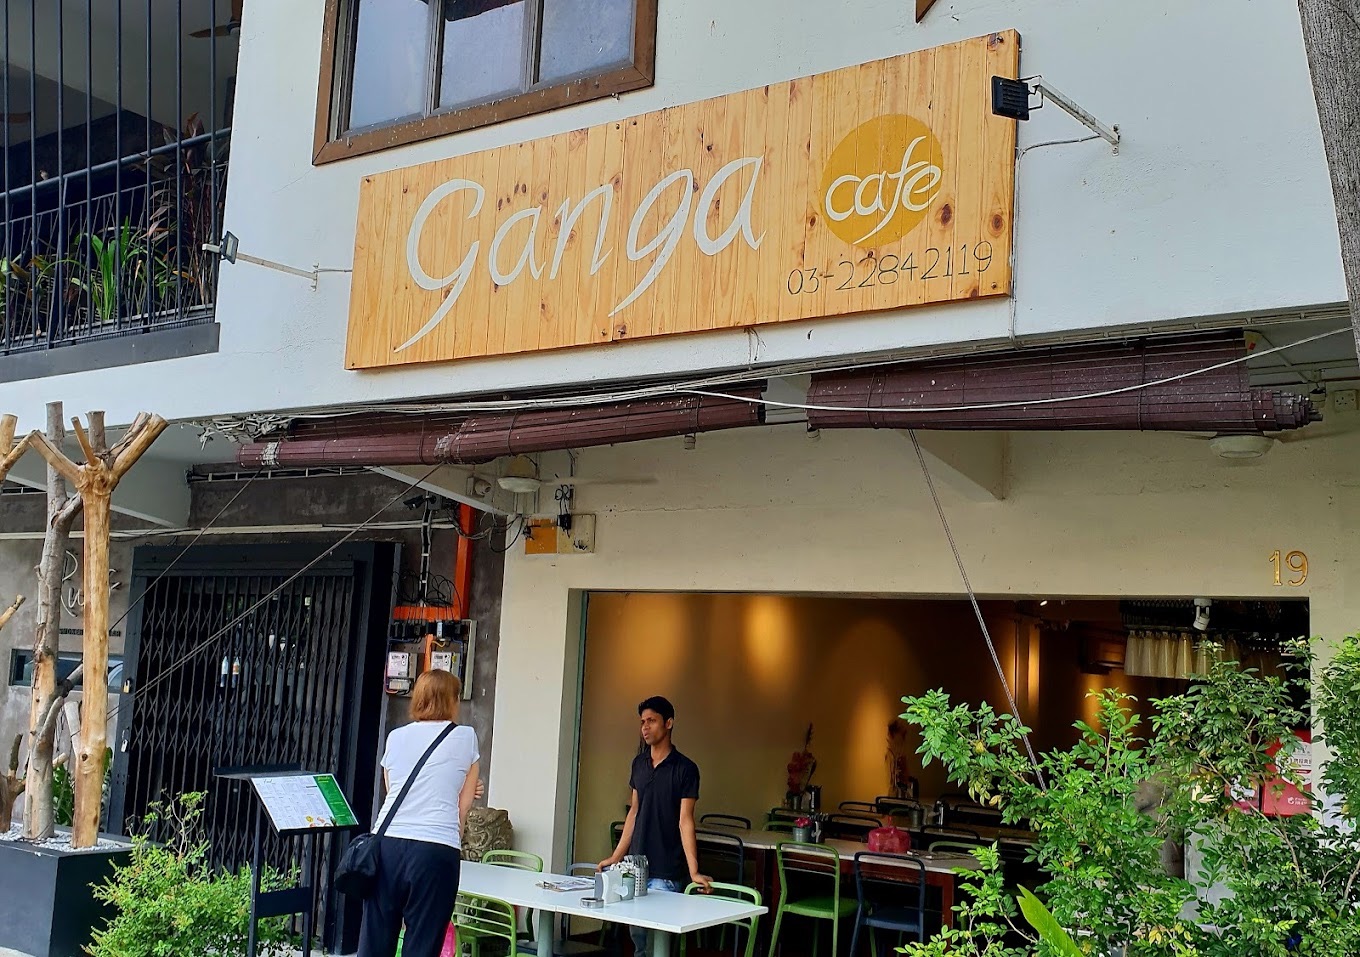 Indian restaurants - the ganga cafe